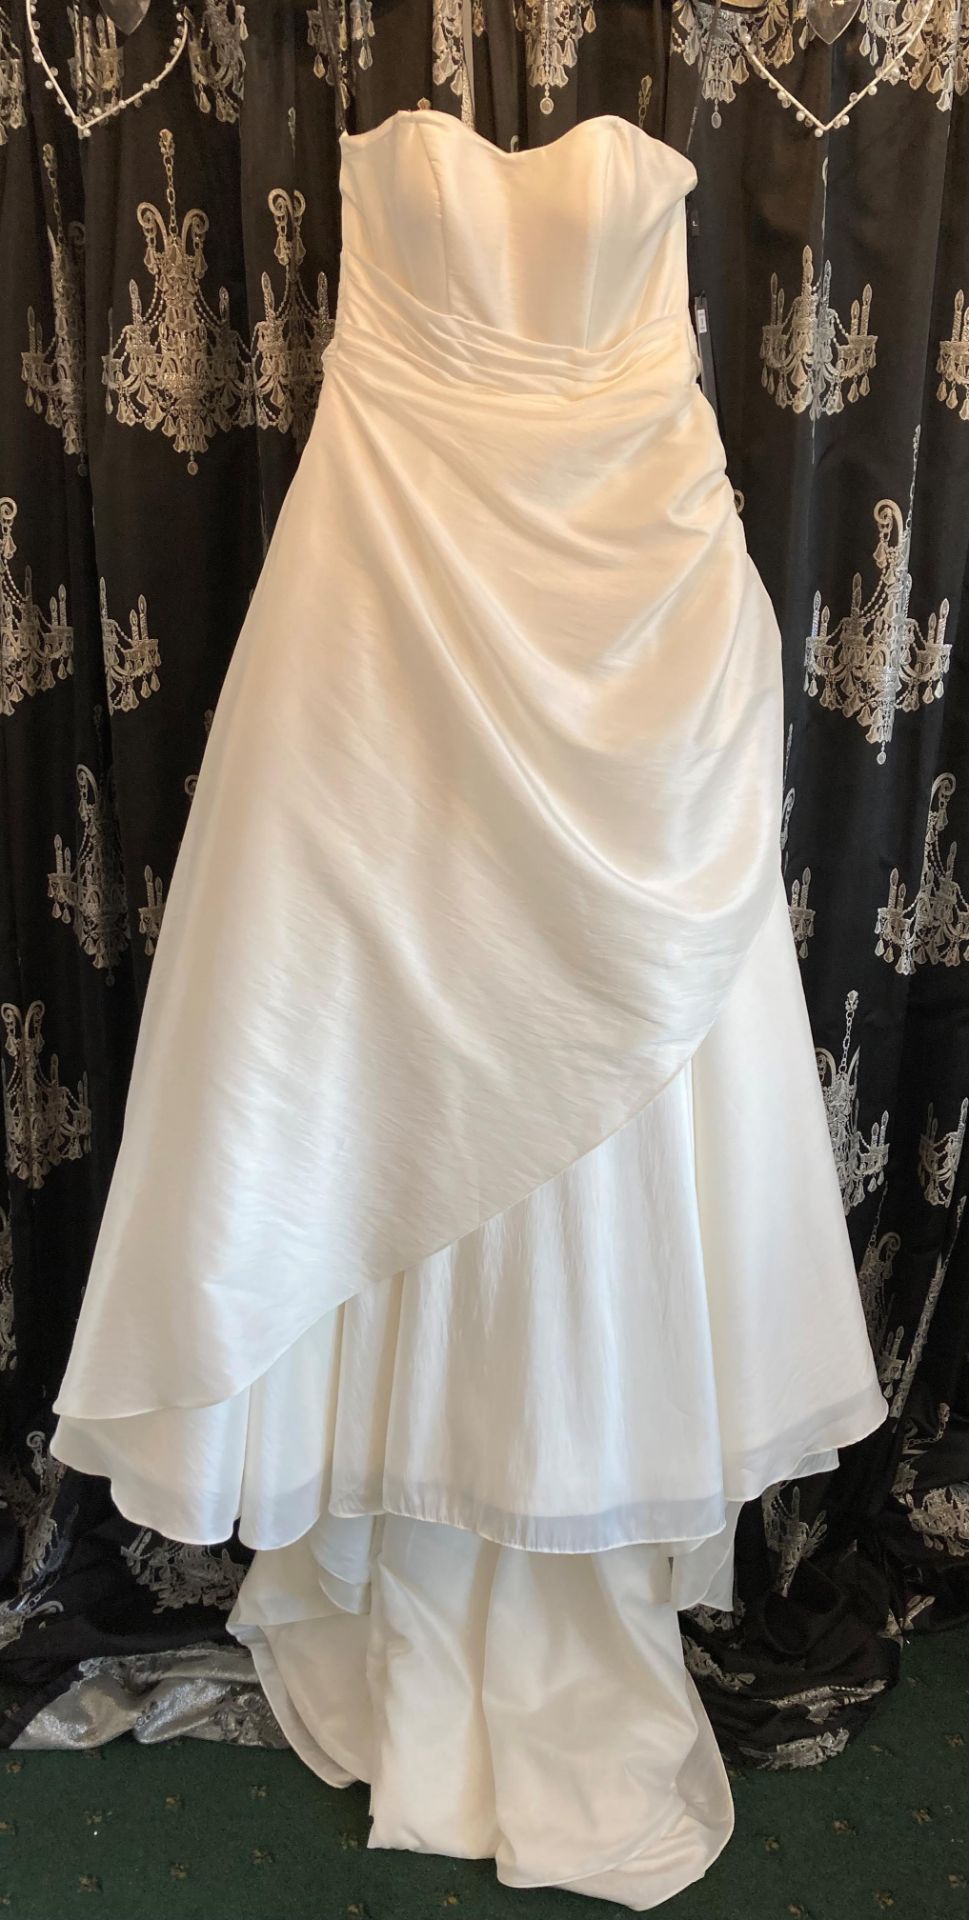 Taffeta ball gown, ivory, size 12.